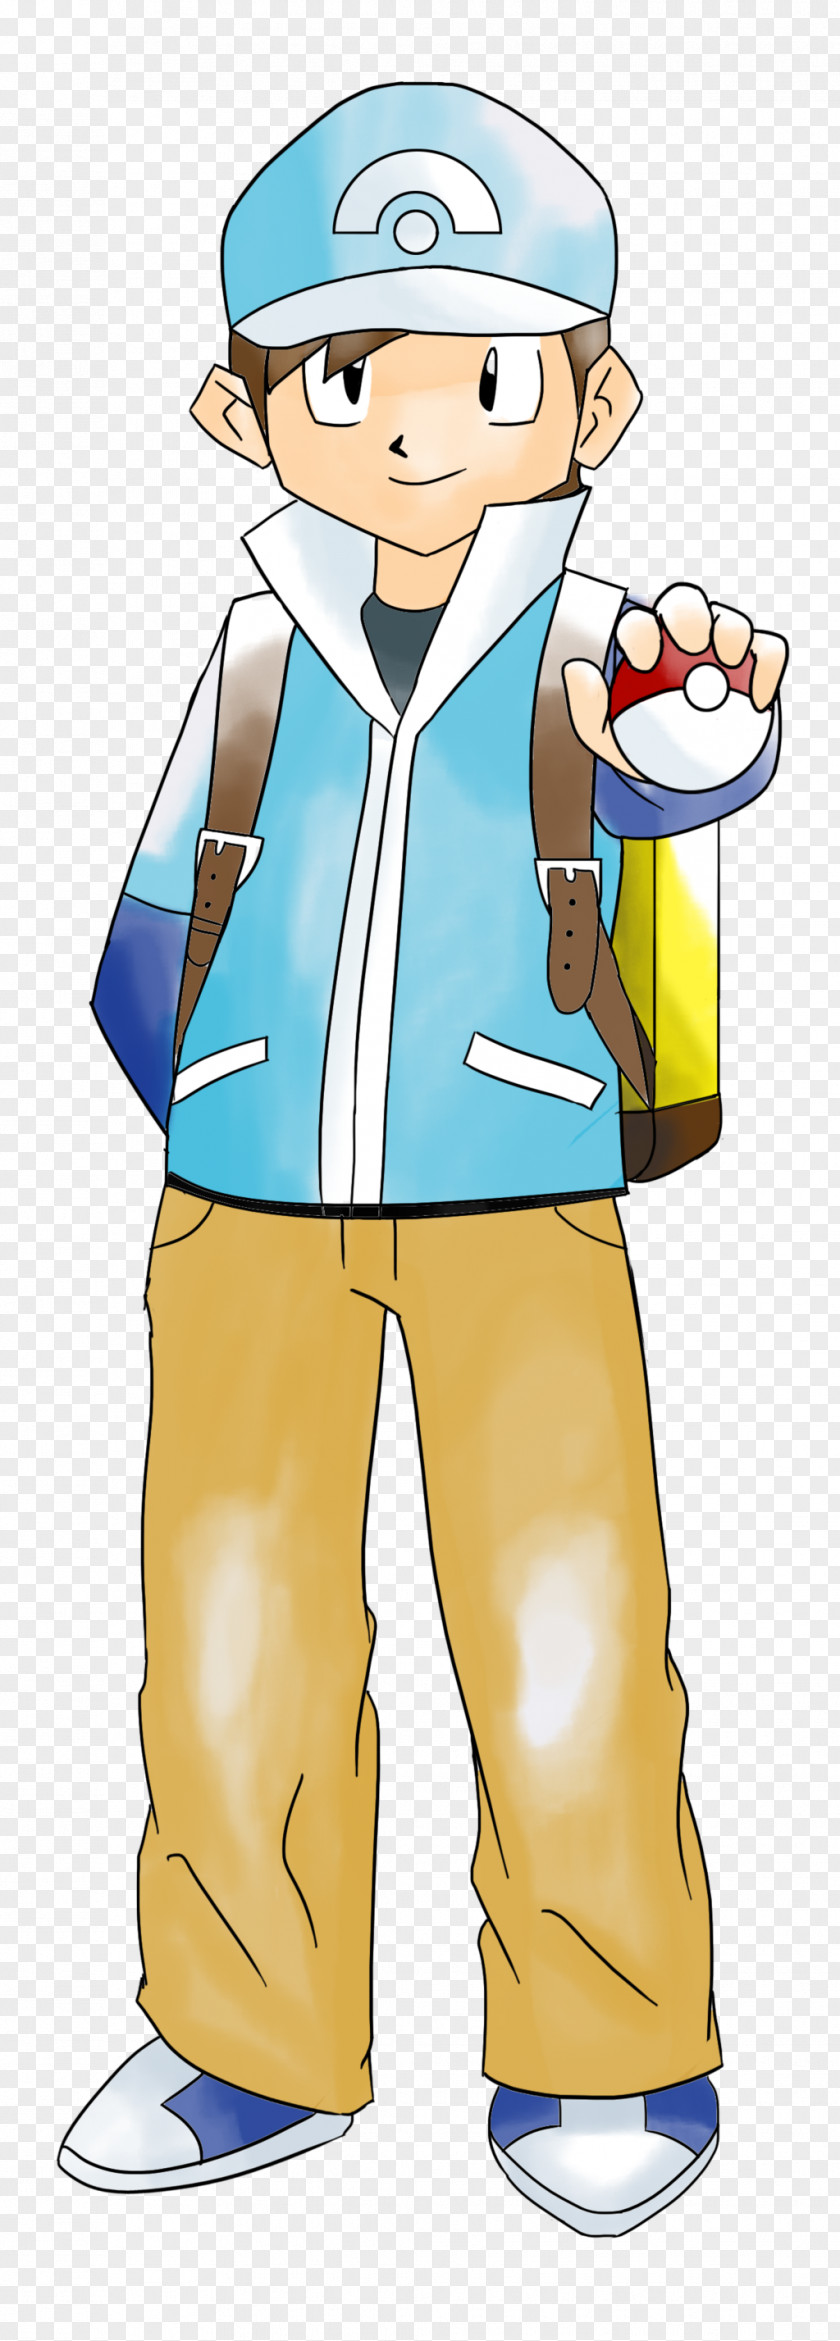 Pokémon Yellow Trainer Sneakers Uniform PNG